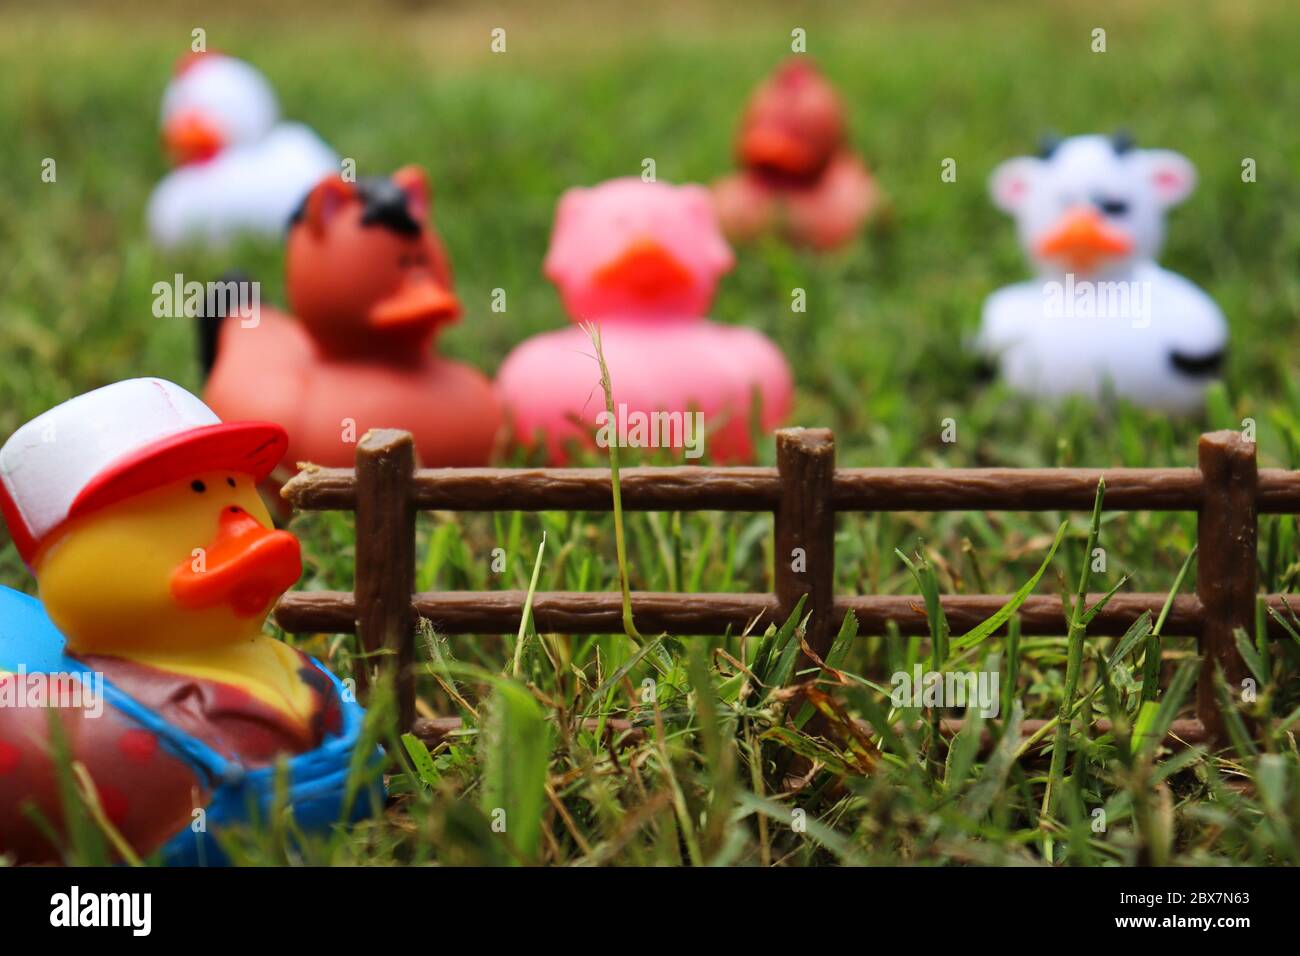 Farm animal rubber ducks and a farmer with a fence Stock Photo